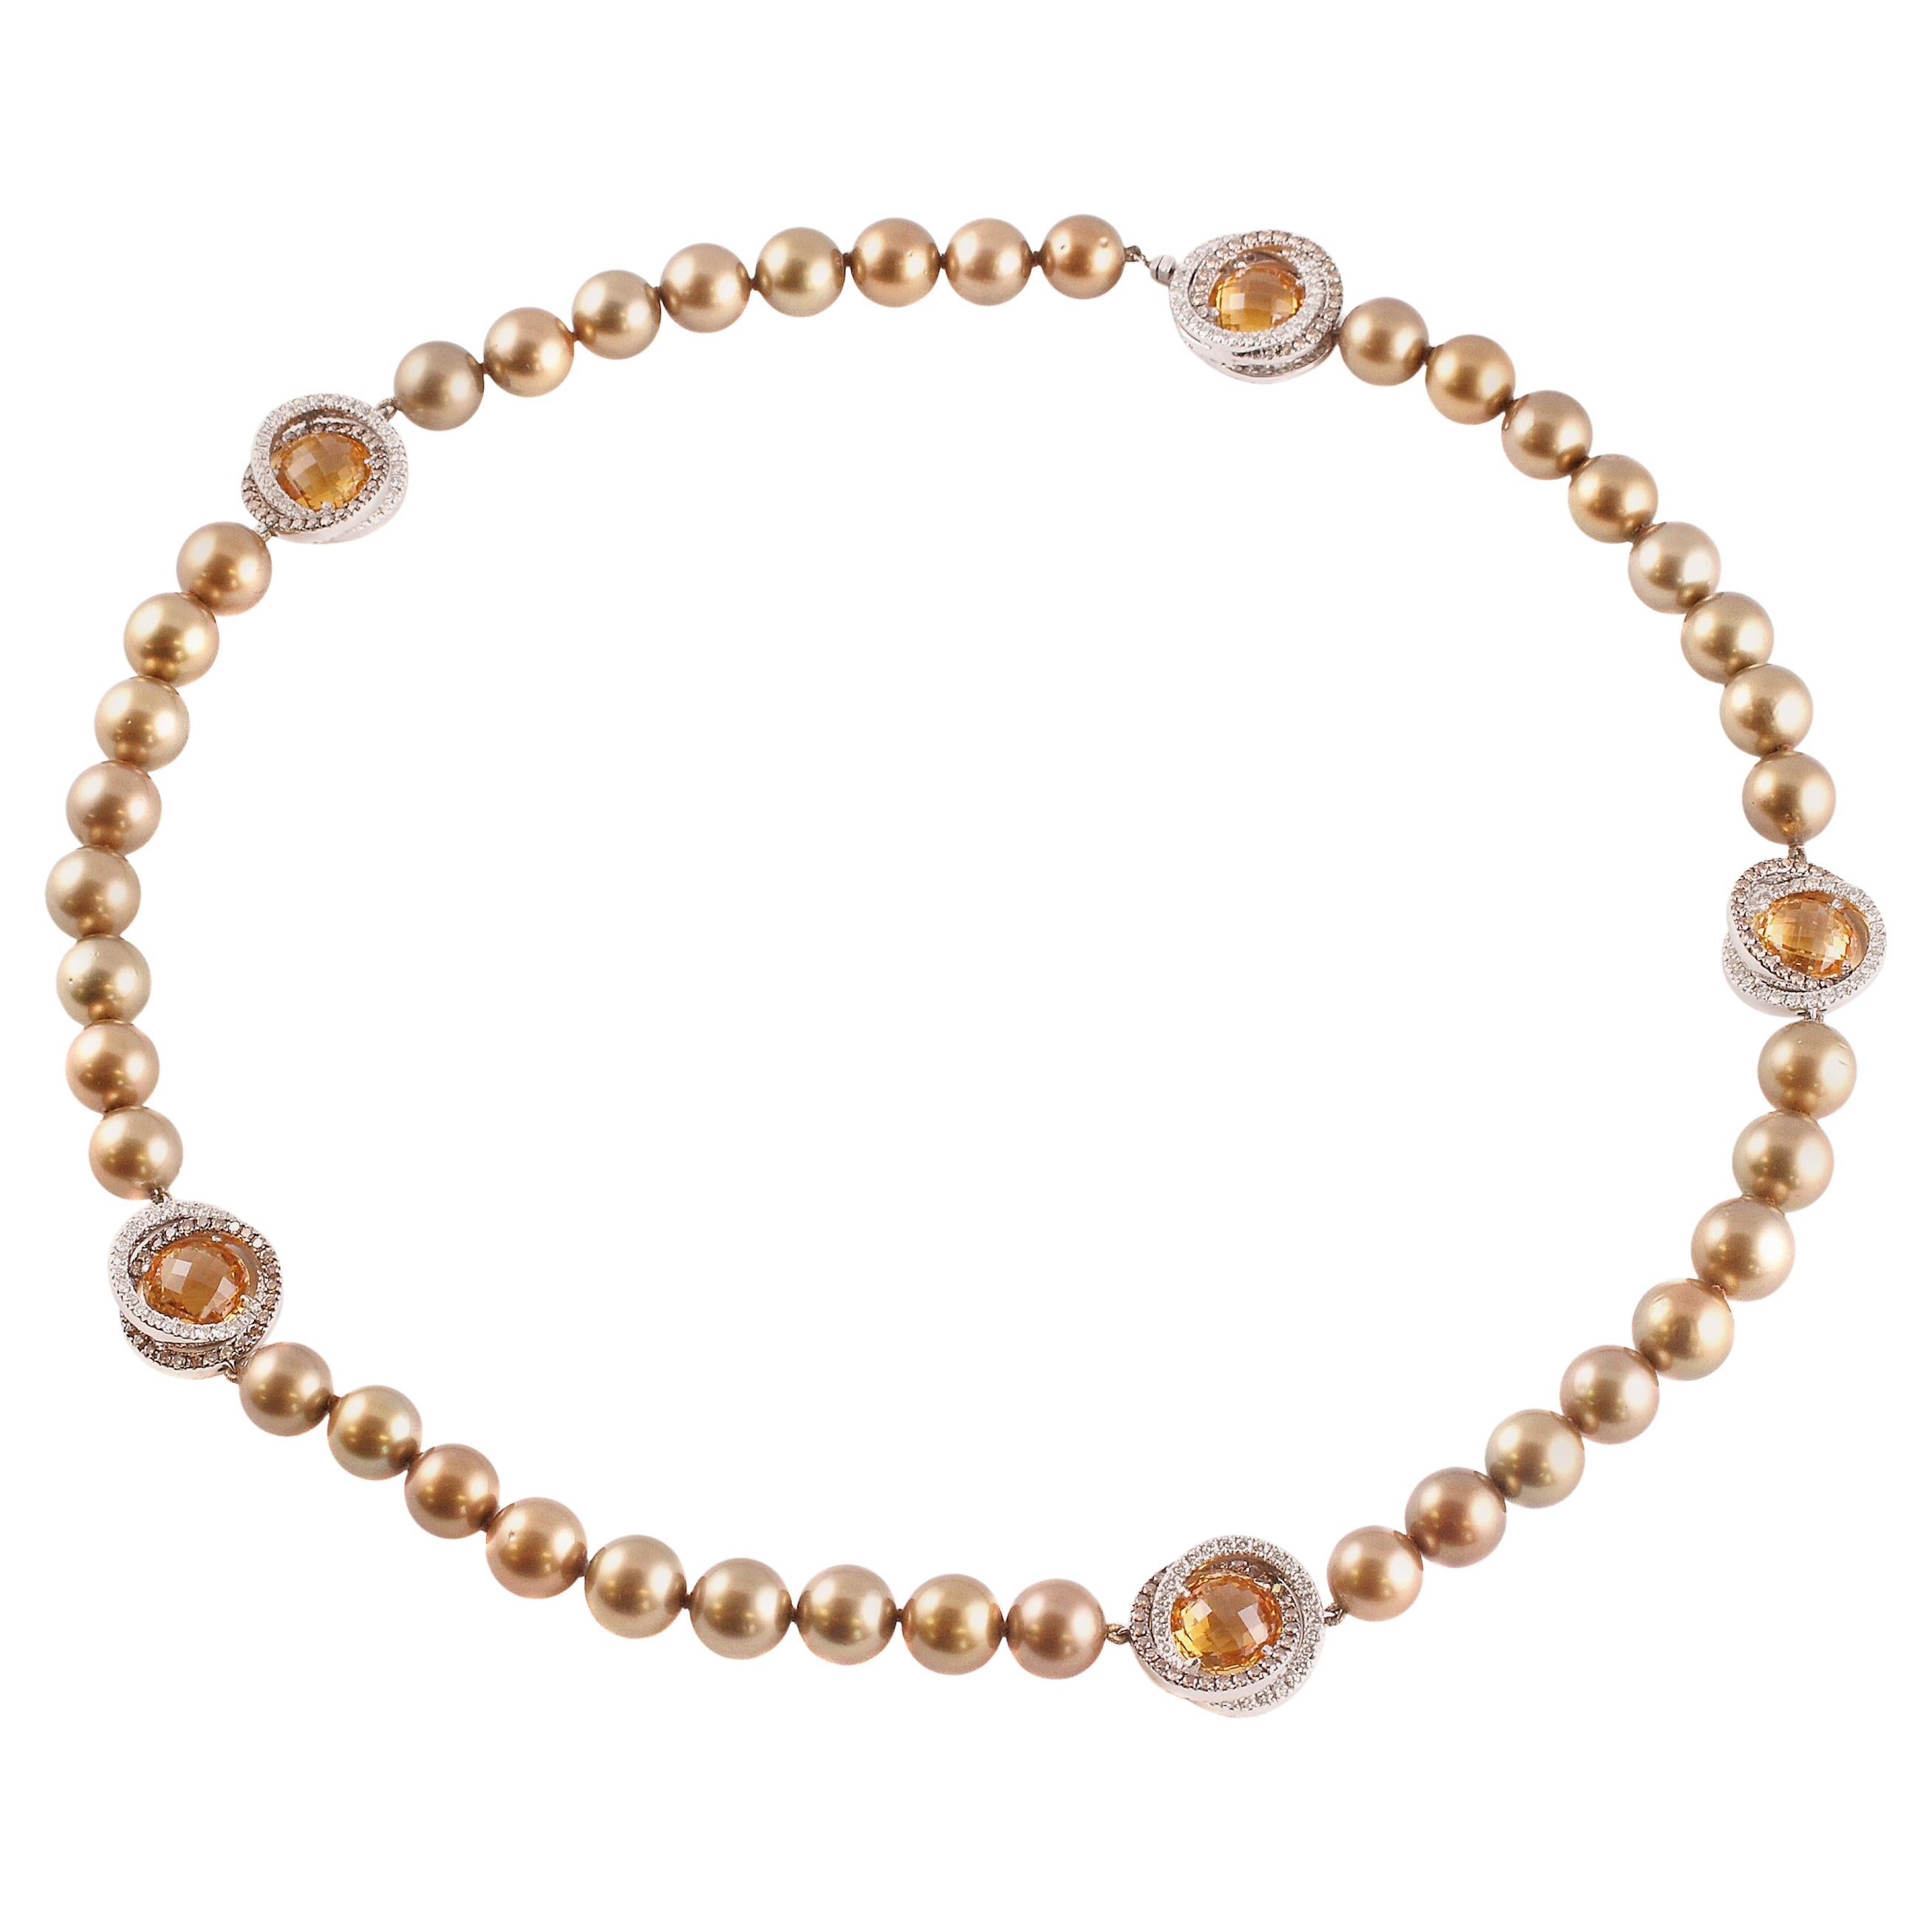 Margot McKinney "Chocolate" Pearl Diamond Citrine Necklace